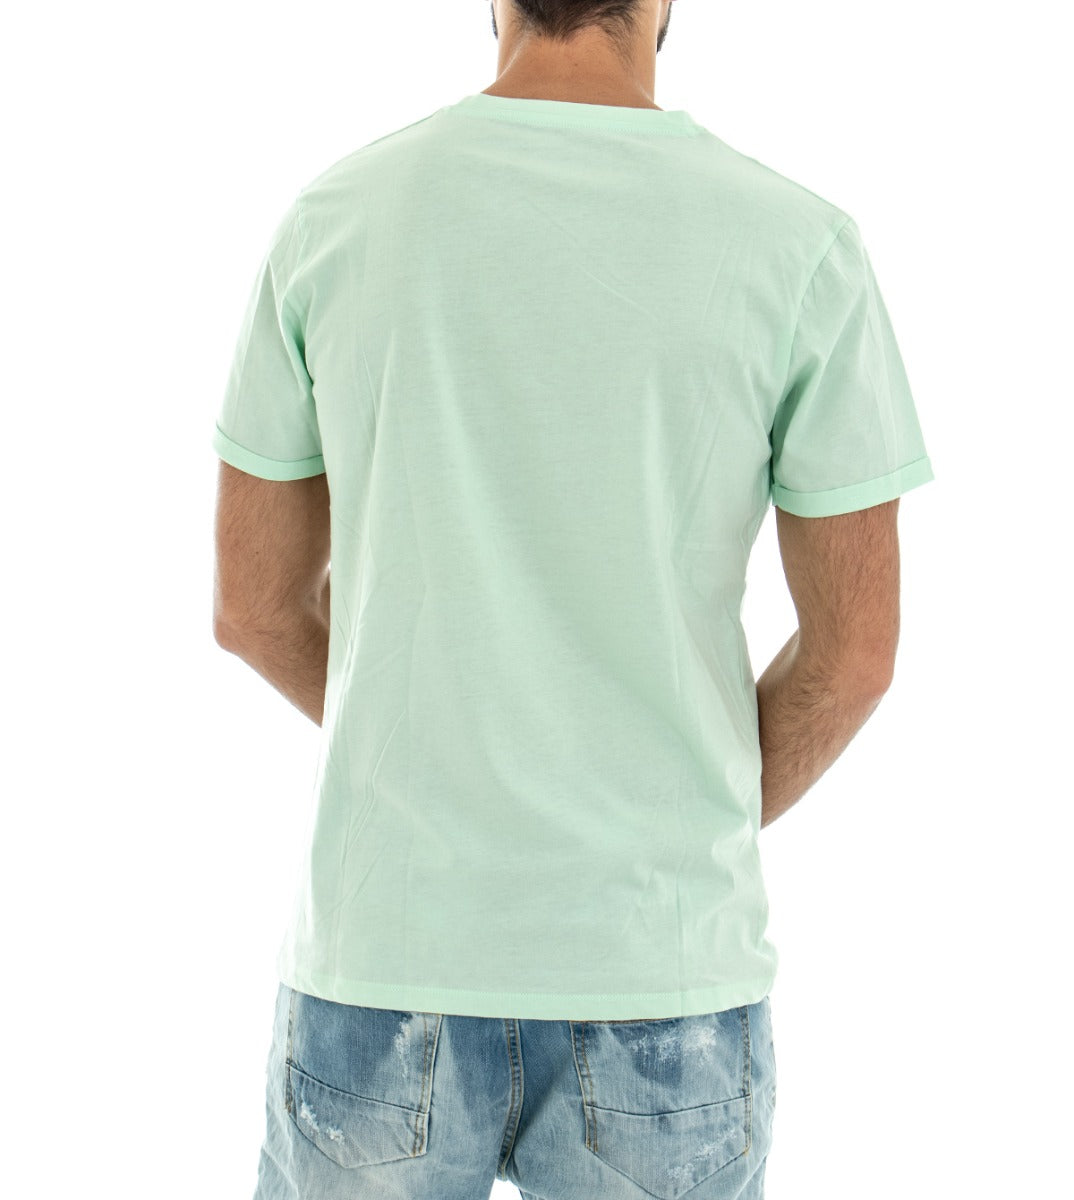 Men's Crew Neck T-Shirt Water Green Written Print Casual Half Sleeves GIOSAL